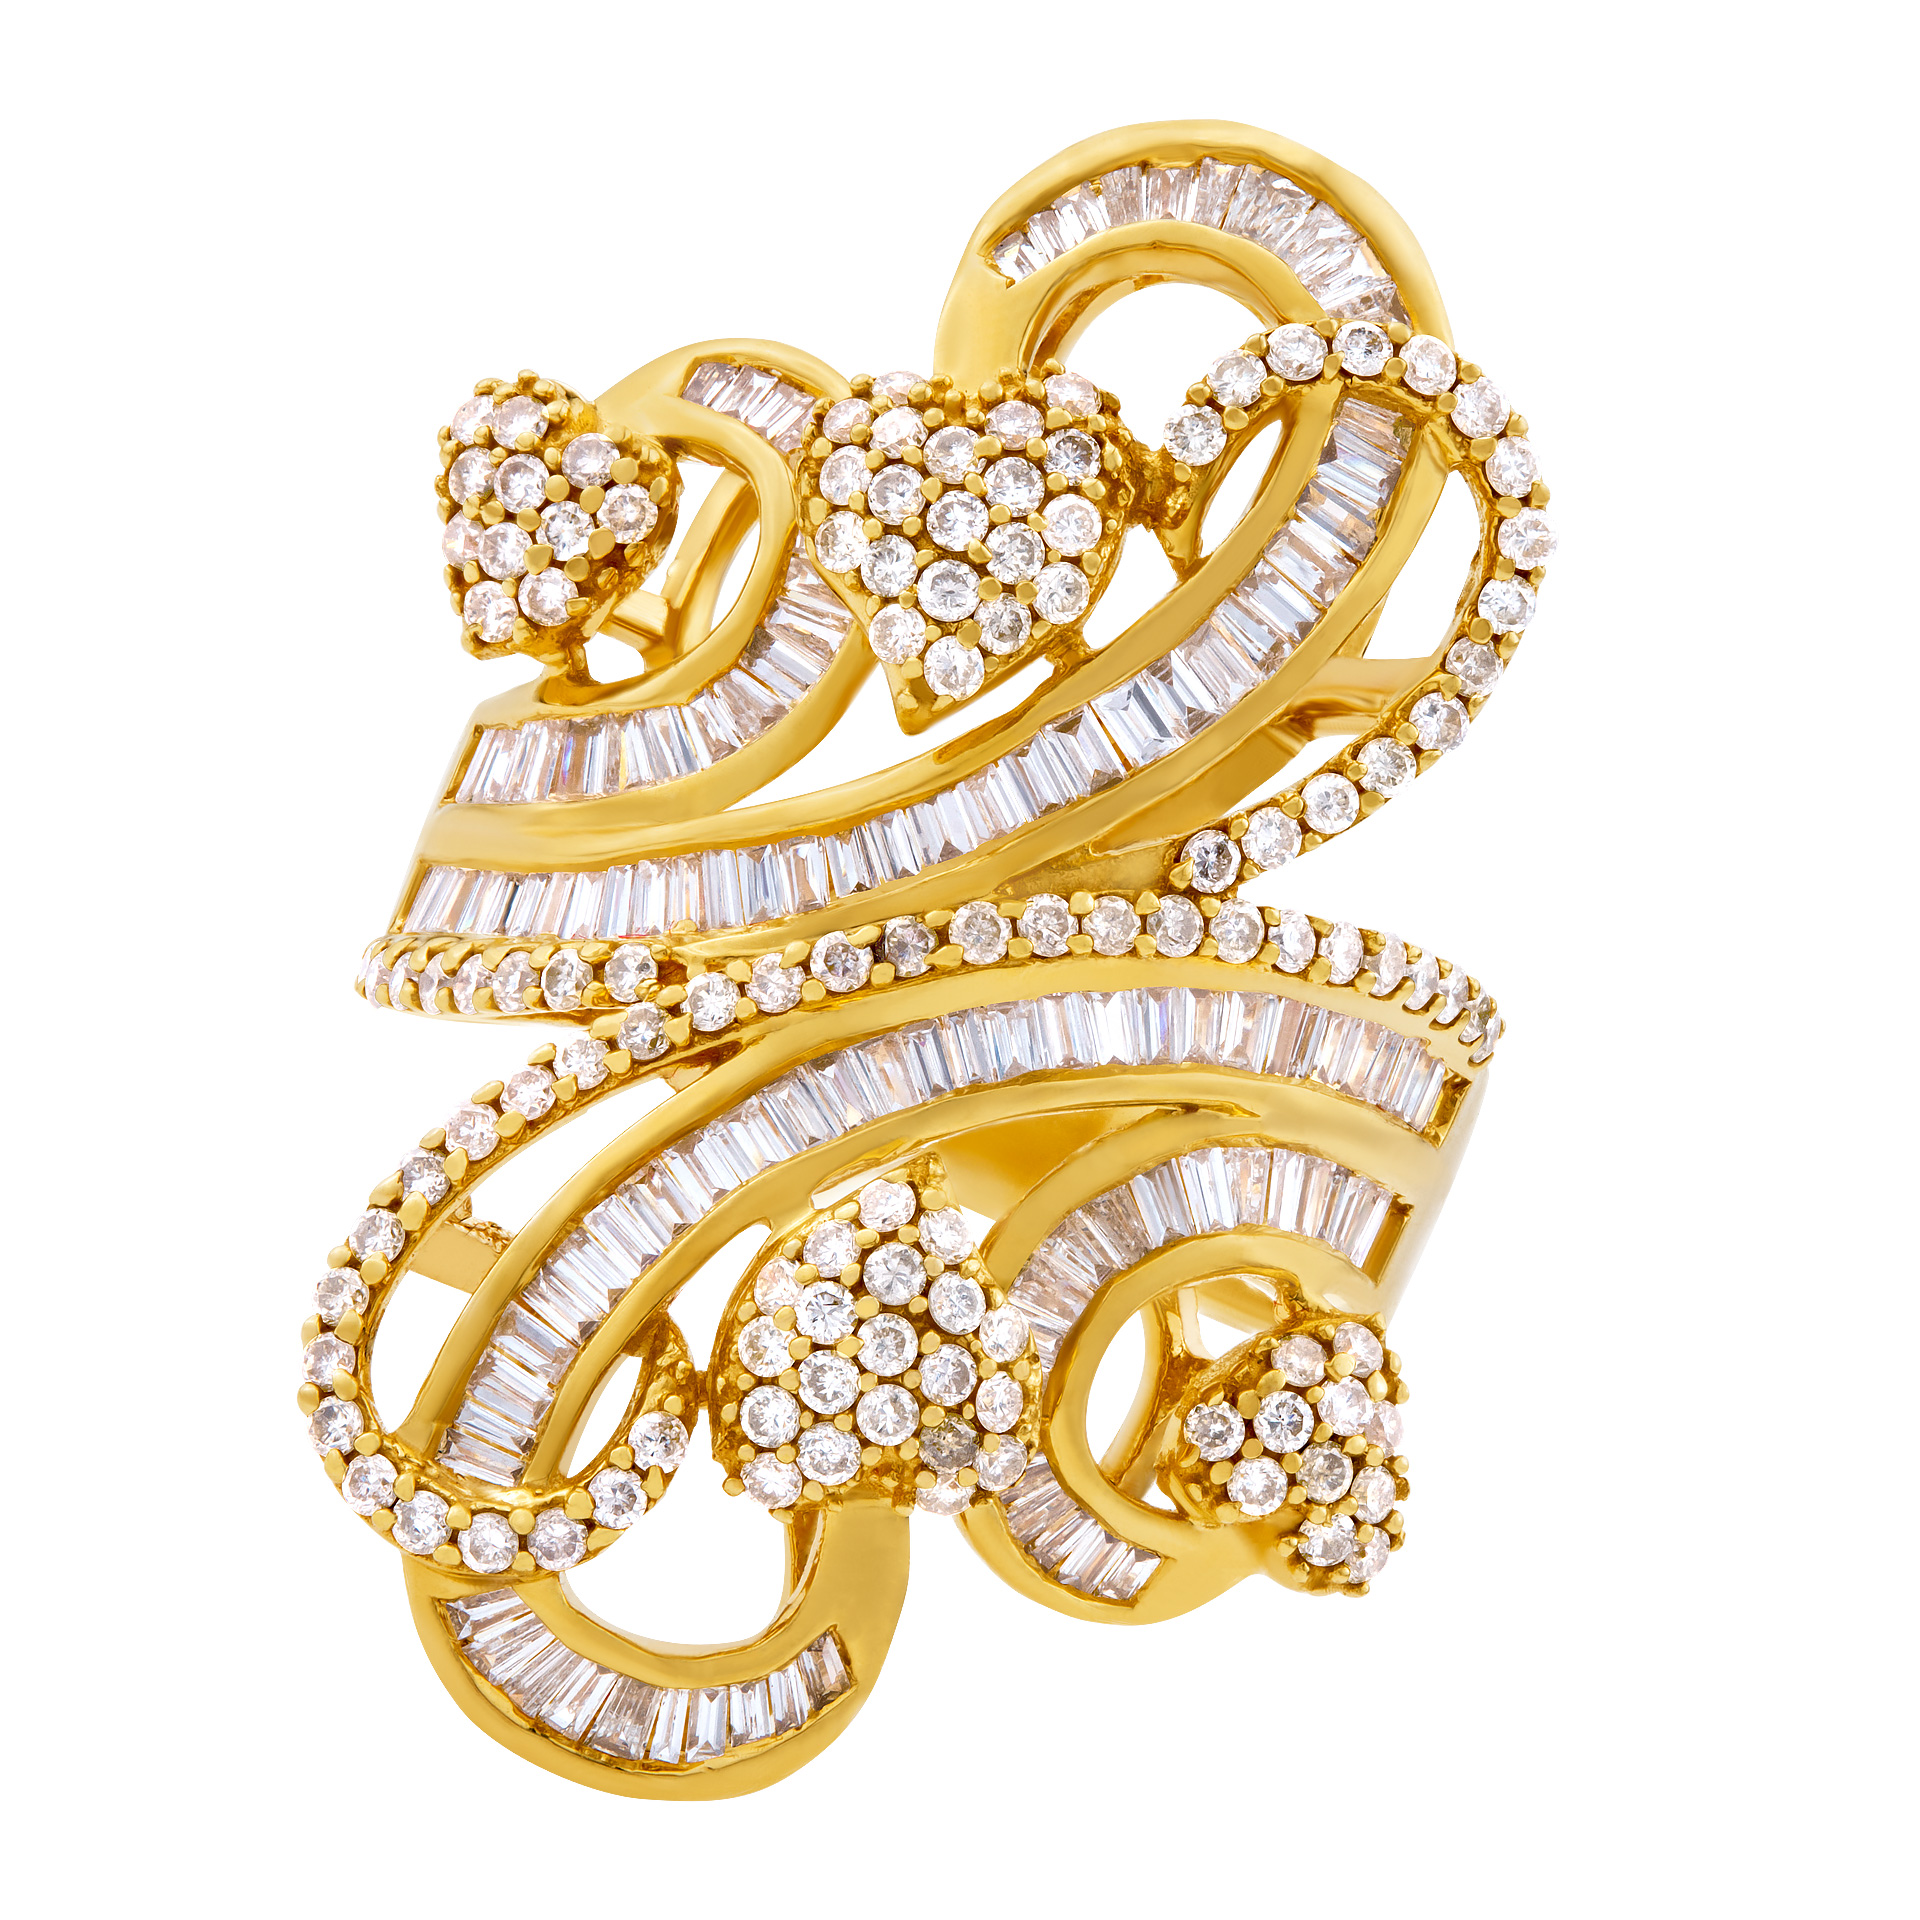 Ladies "Bow of love" diamond ring set in 18 k yellow gold